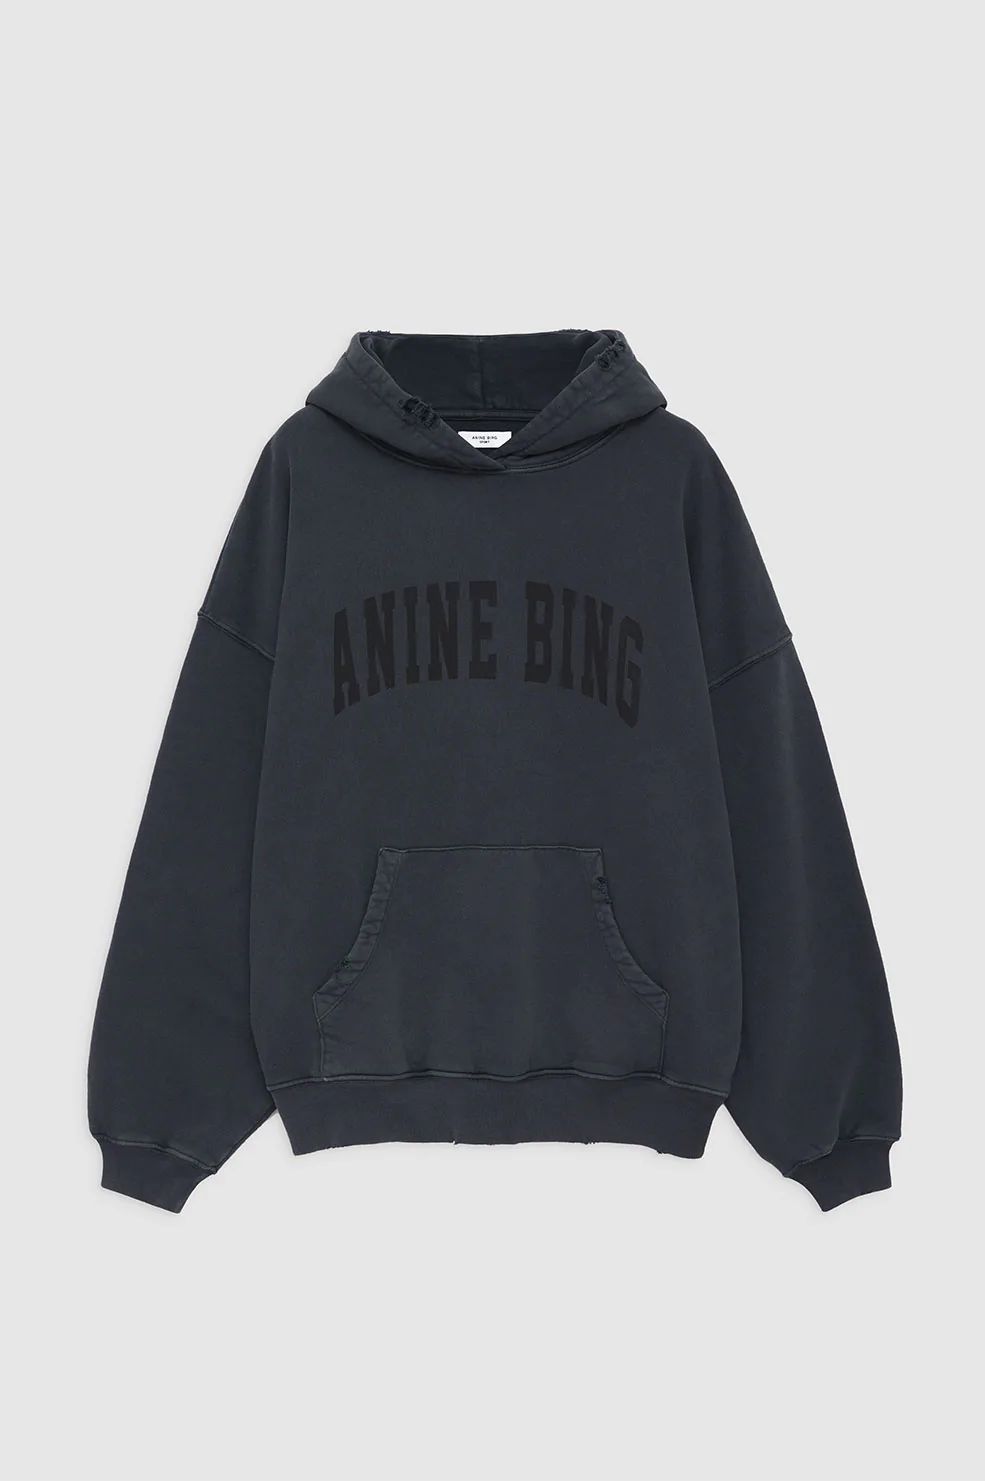 Harvey Sweatshirt | Anine Bing